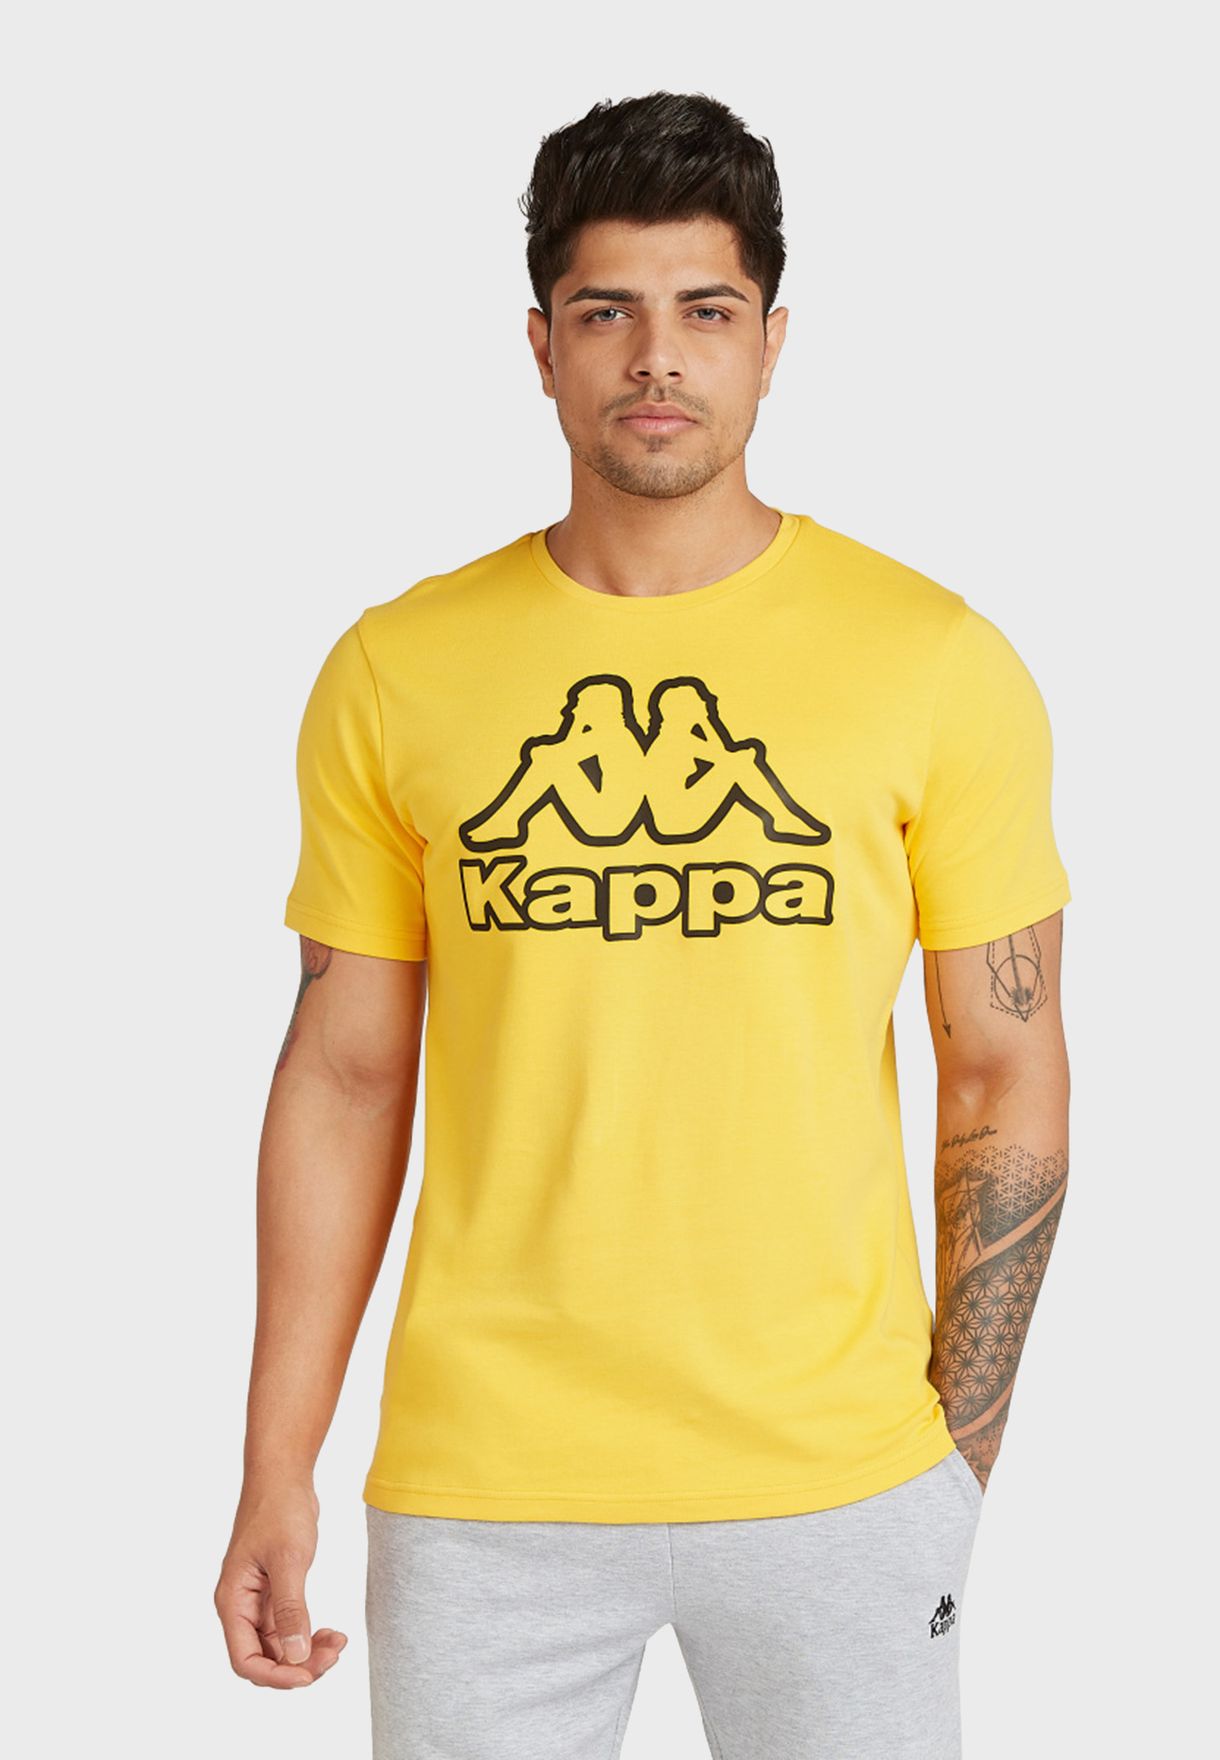 kappa t shirts price in india